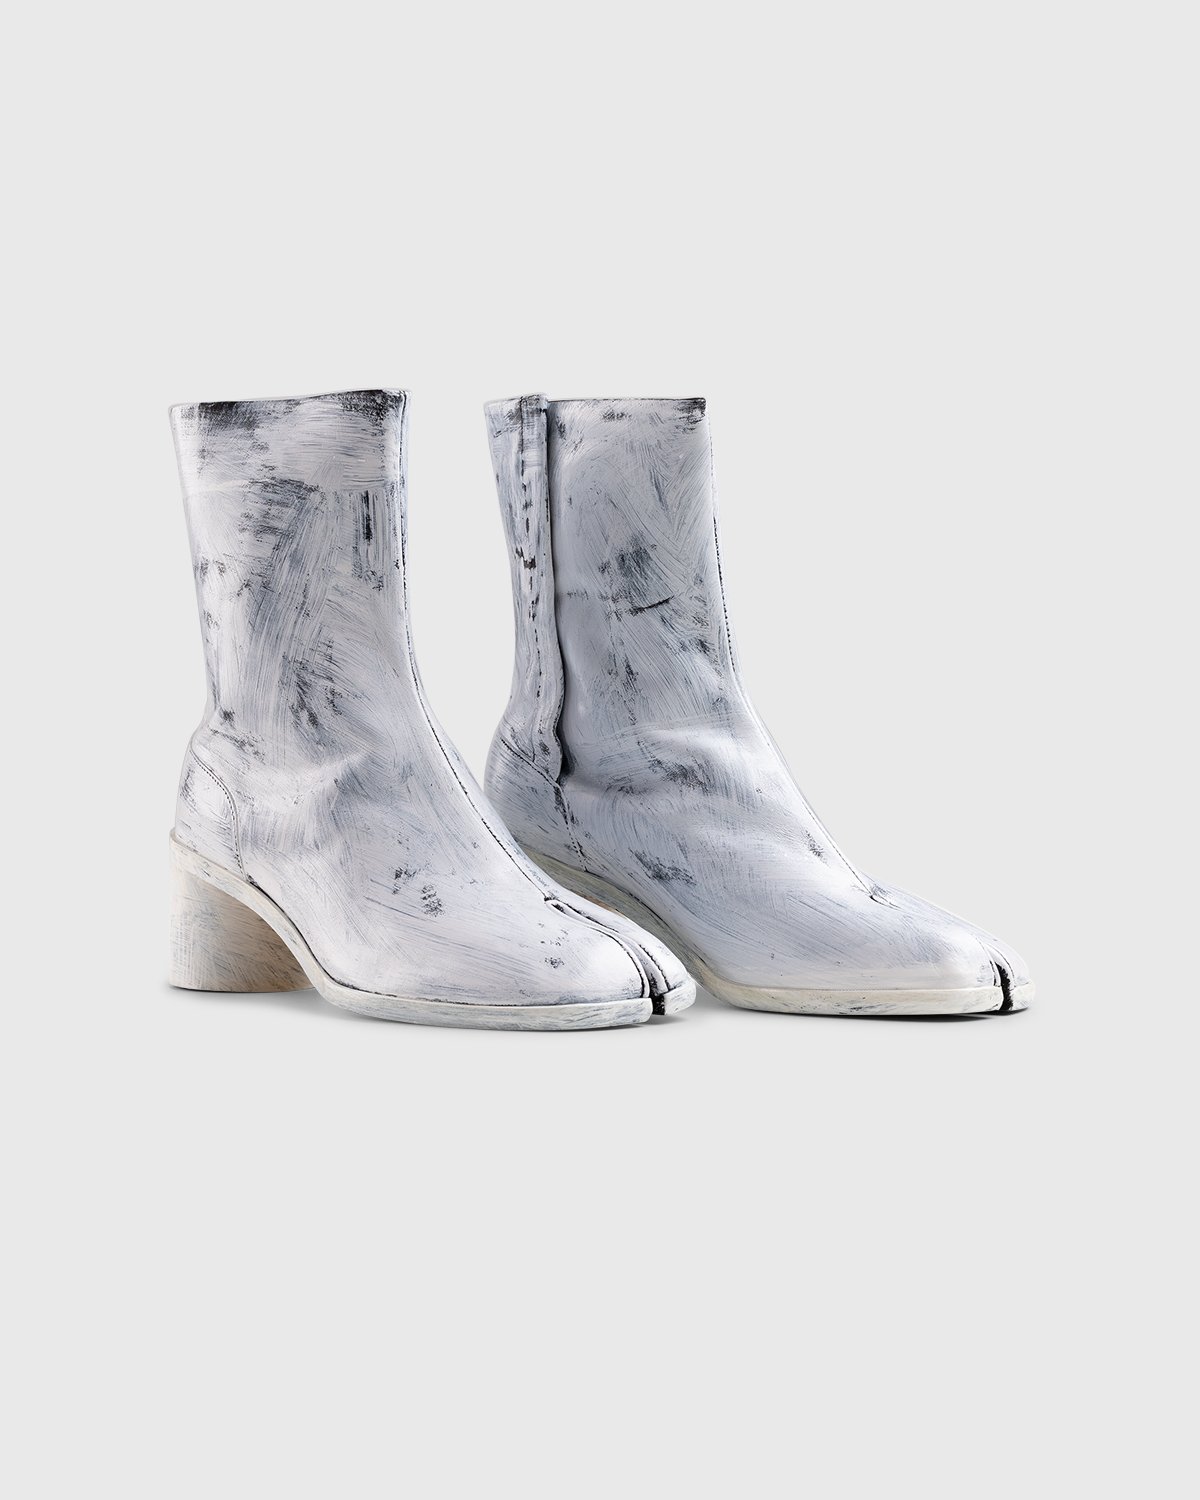 Maison Margiela - Tabi Bianchetto Chelsea Boots White - Footwear - White - Image 2